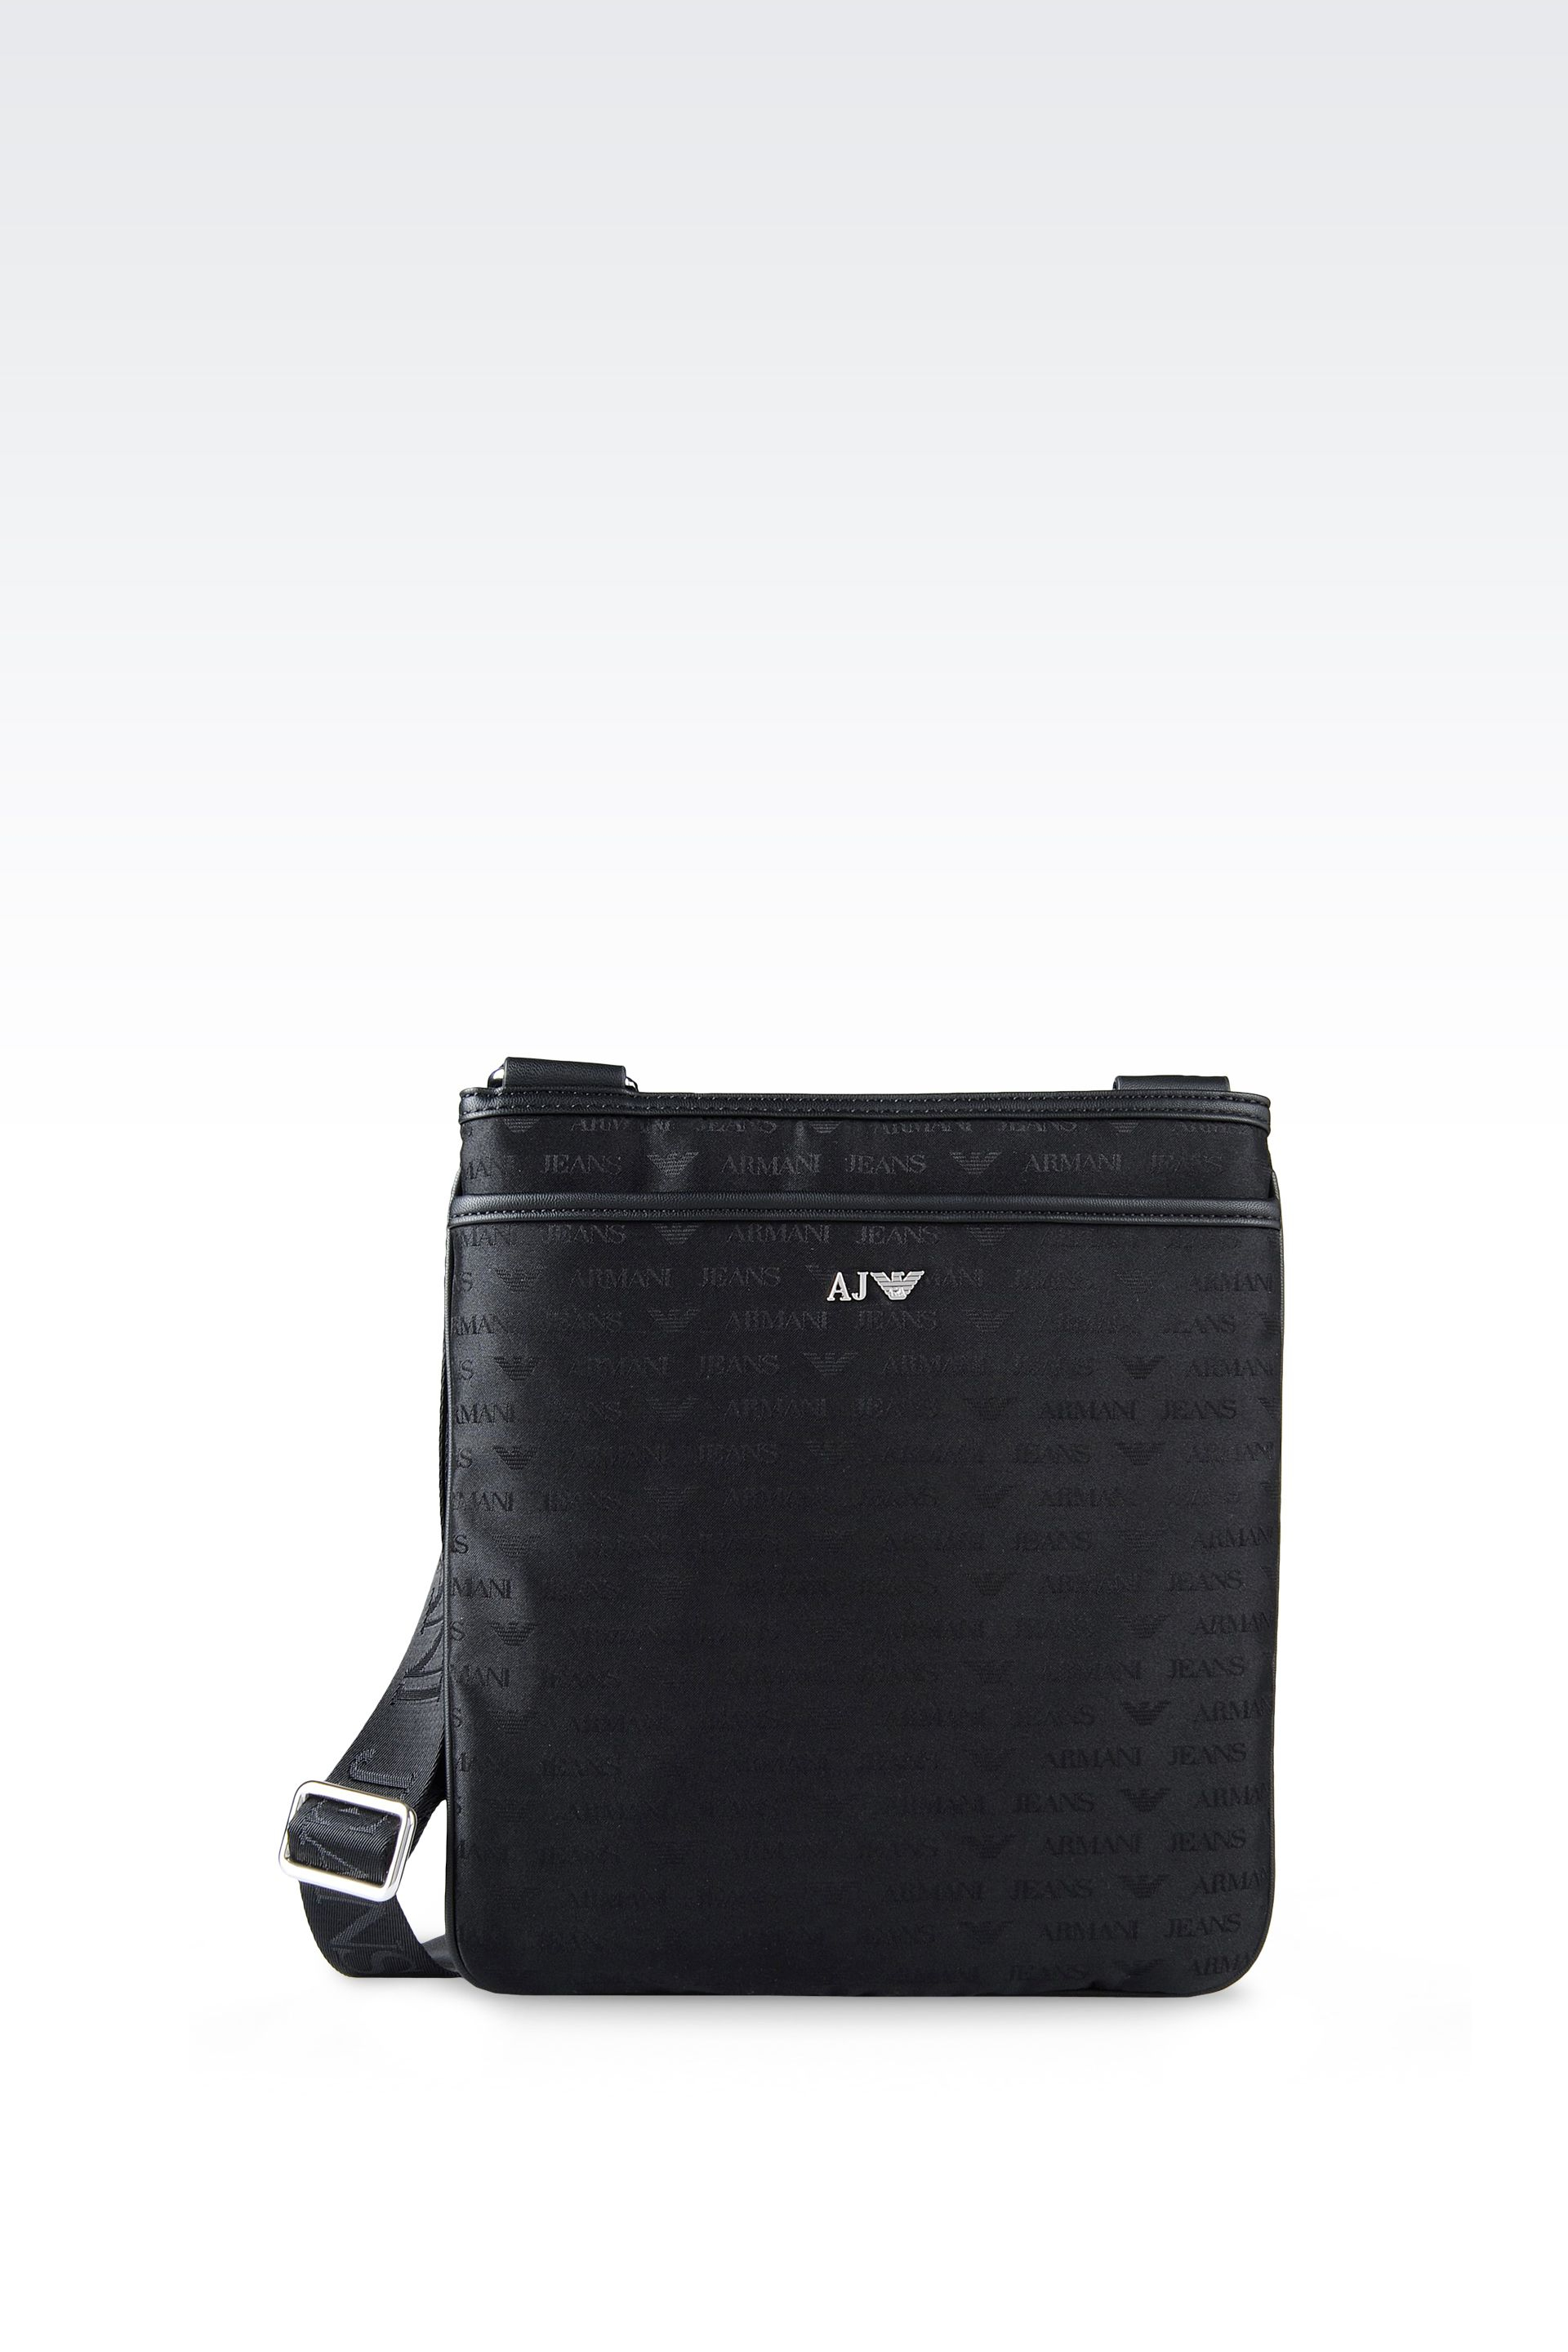 armani jeans messenger bag black